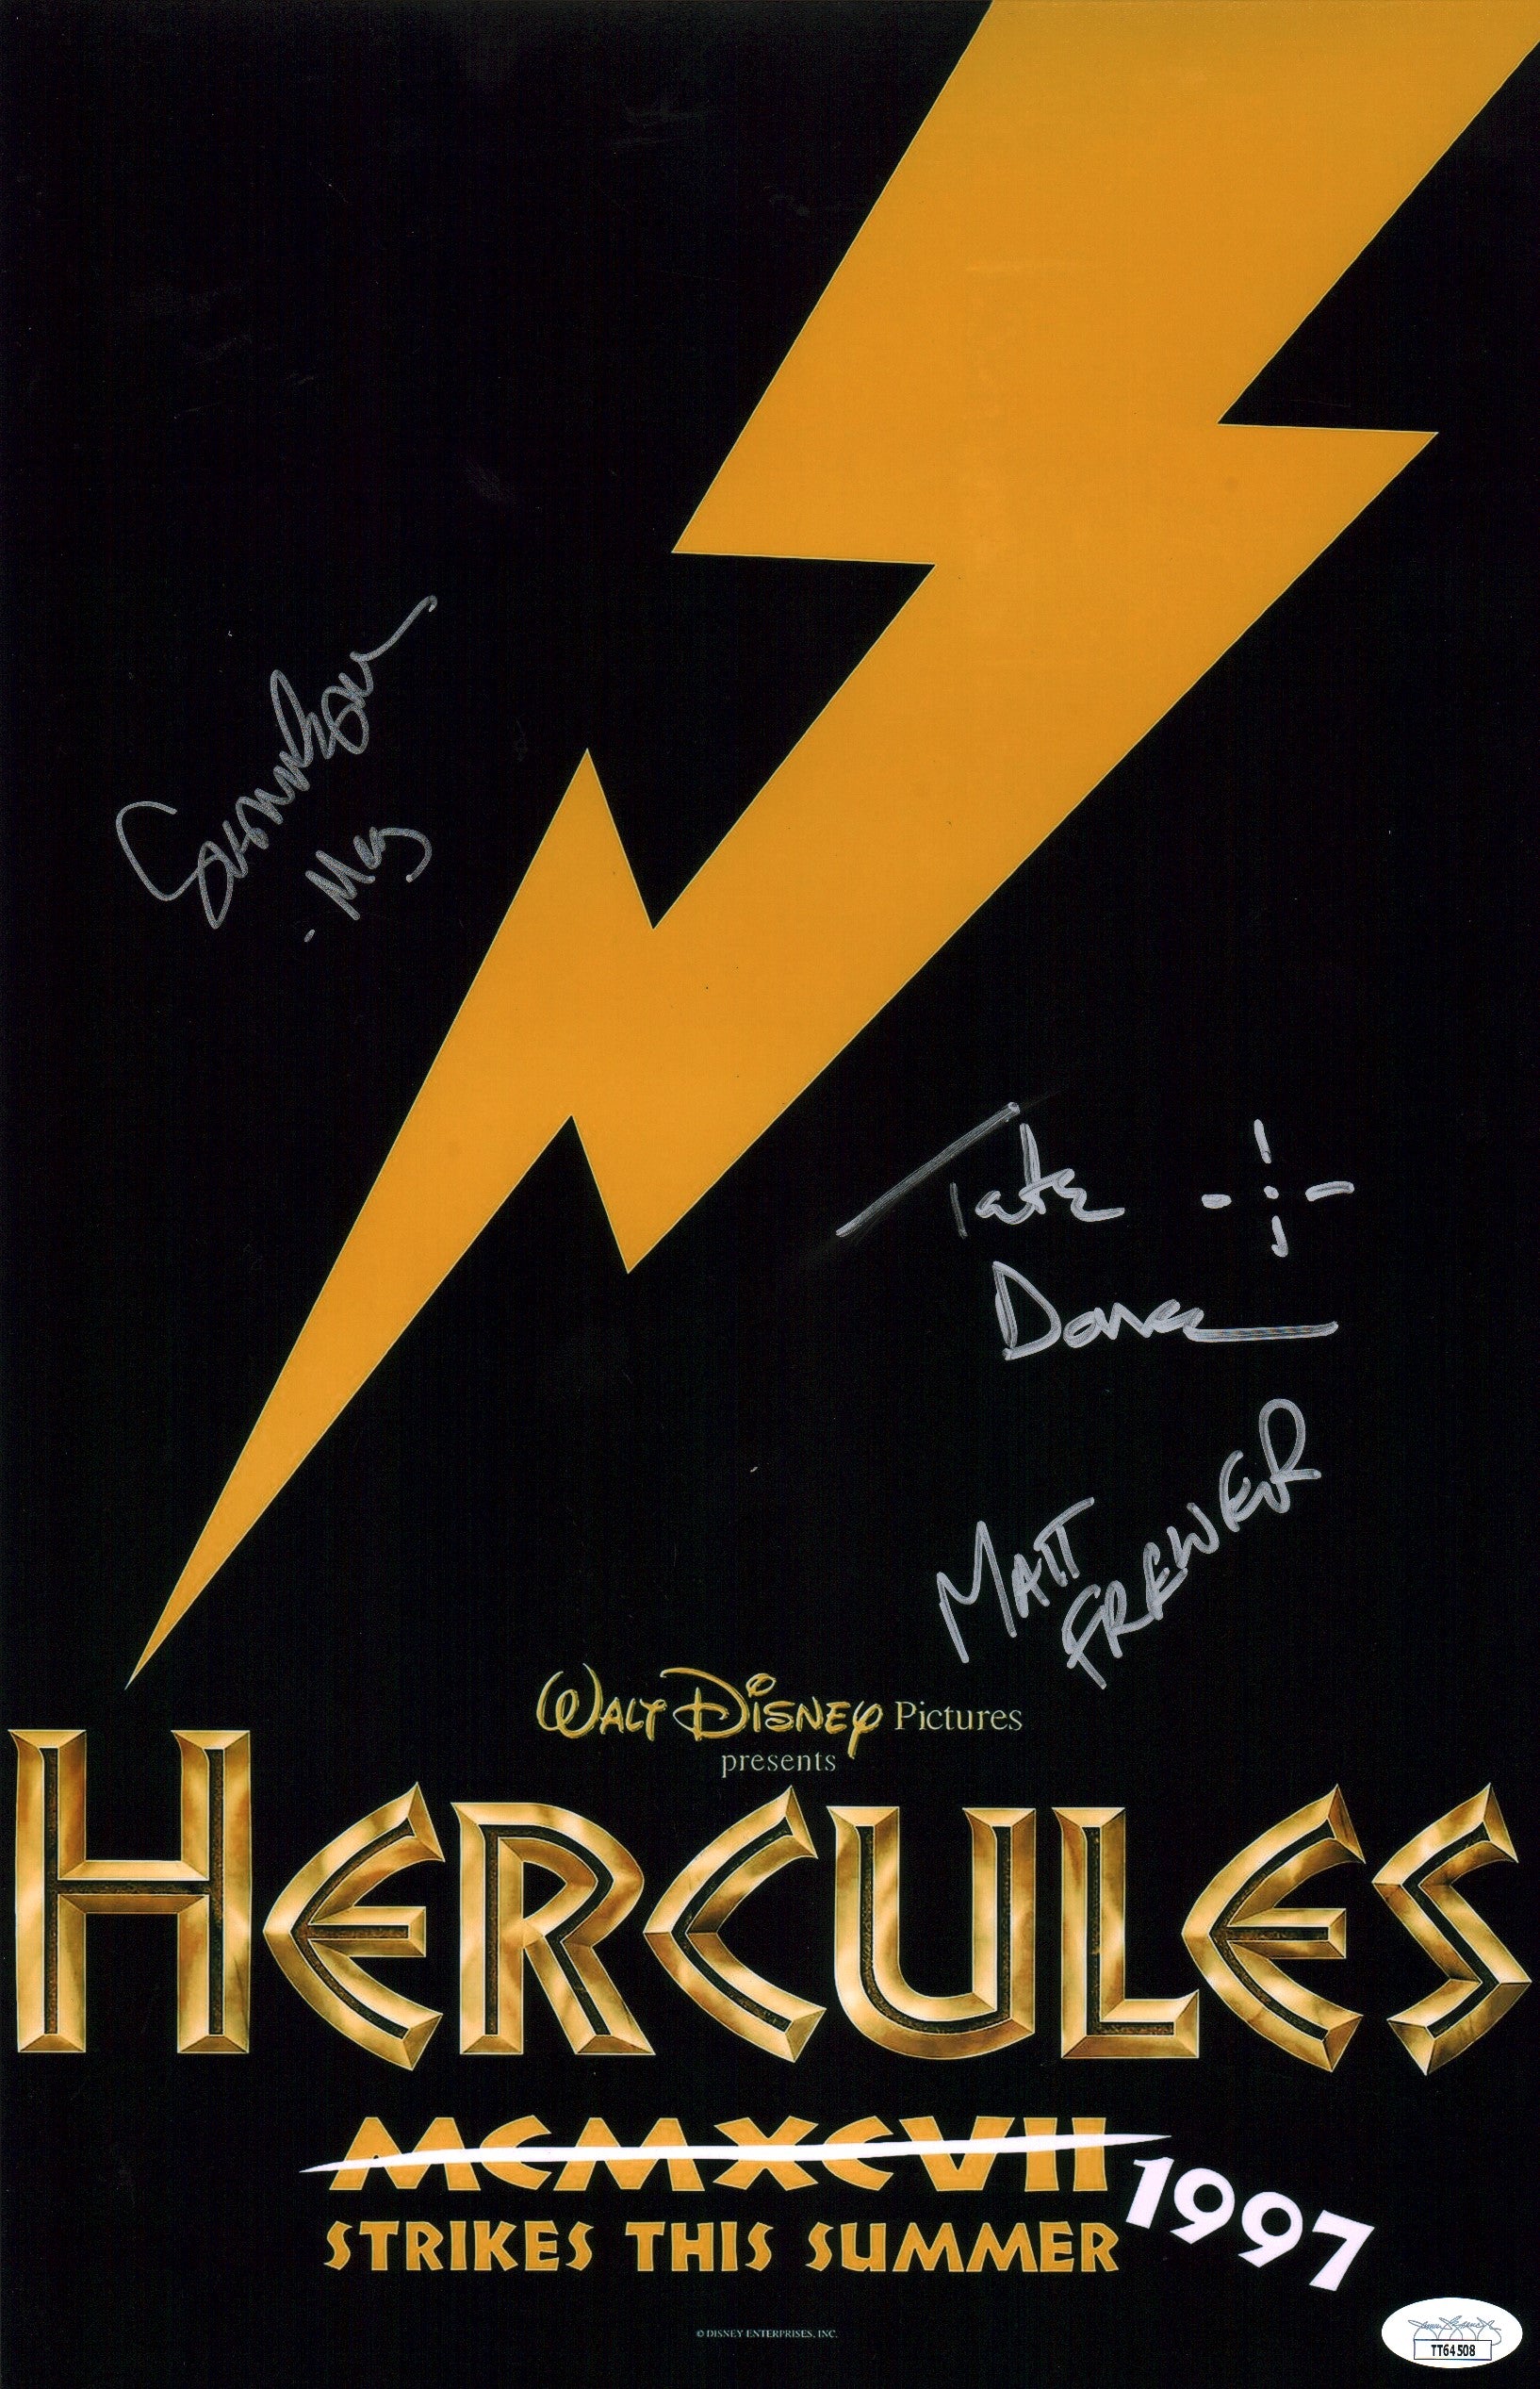 Disney Hercules 11x17 Photo Poster Egan Donovan Frewer Signed Autograph JSA Certified COA